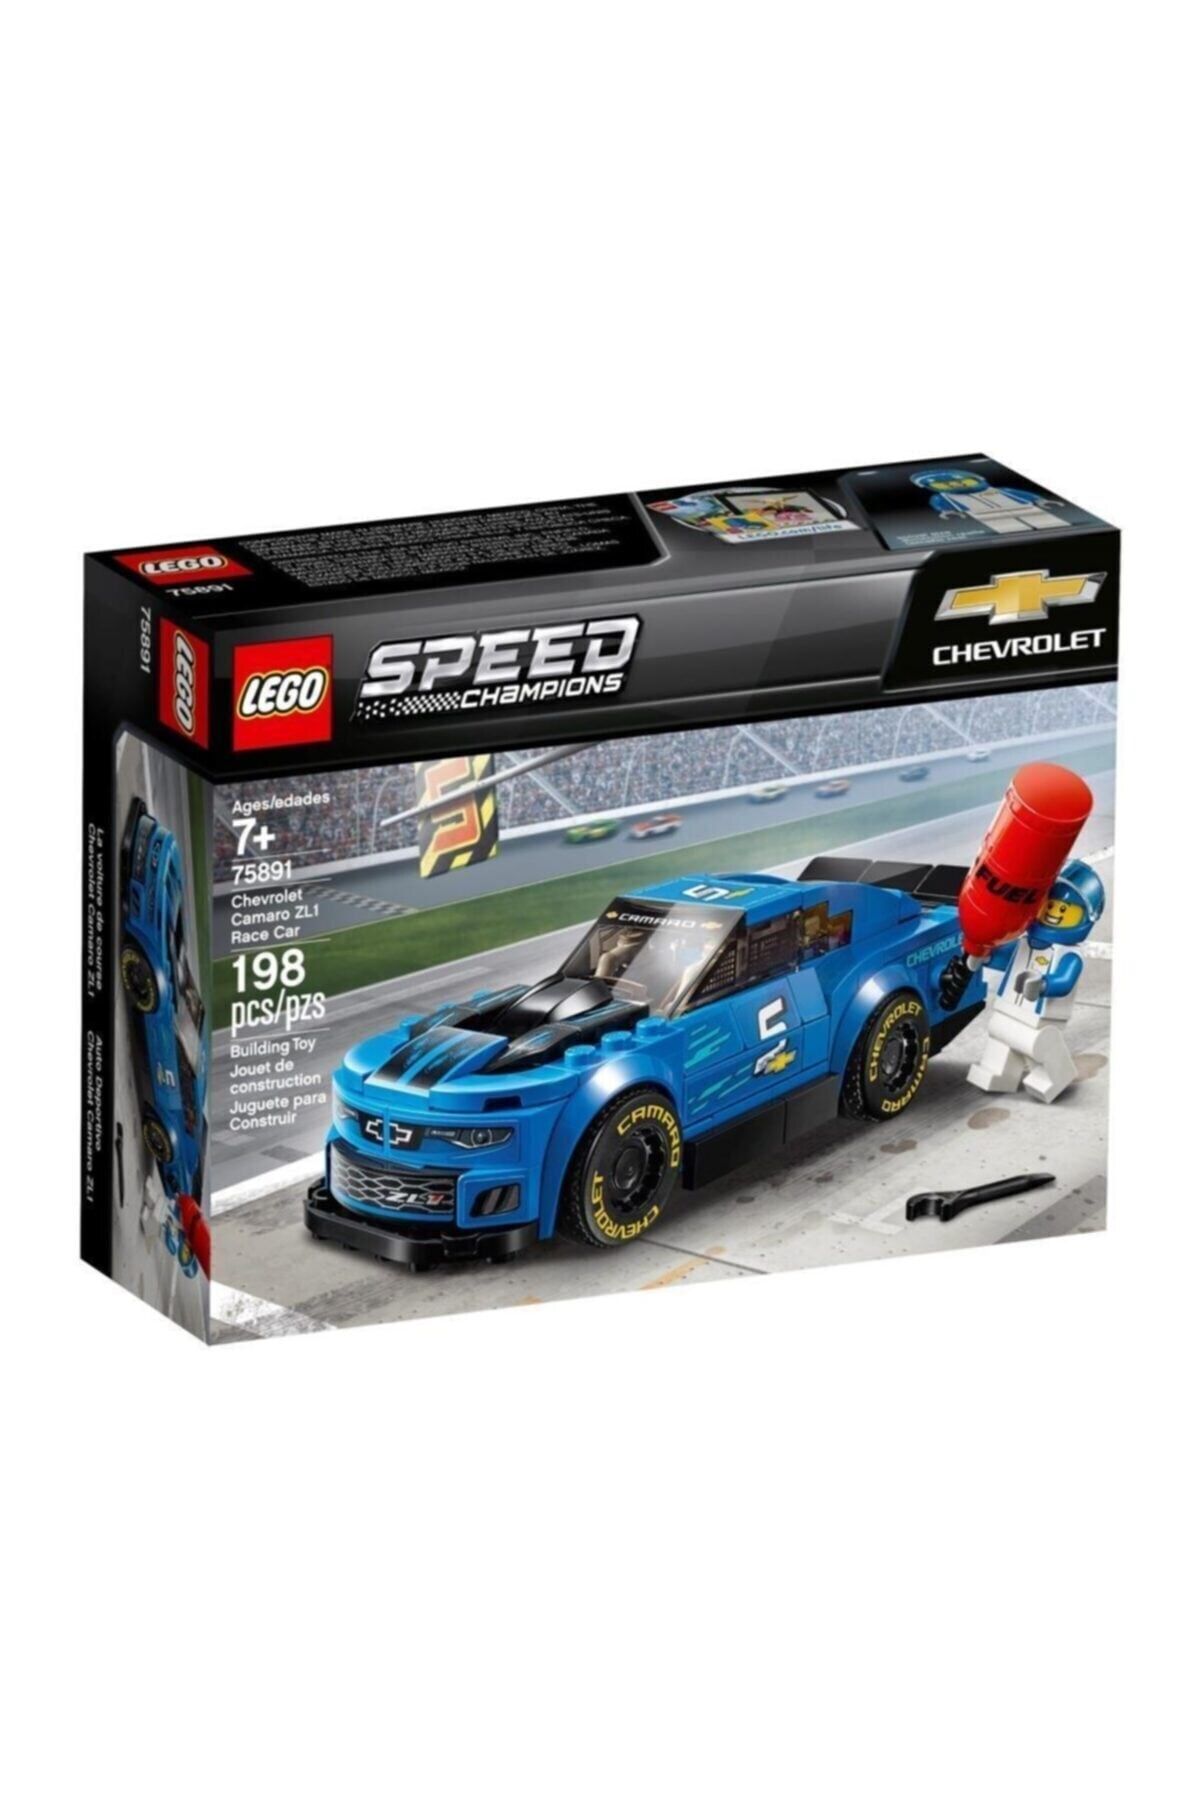 LEGO Speed Champions Chevrolet Camaro Zl1 Race Car 75891 Building Kit (198 Piece)